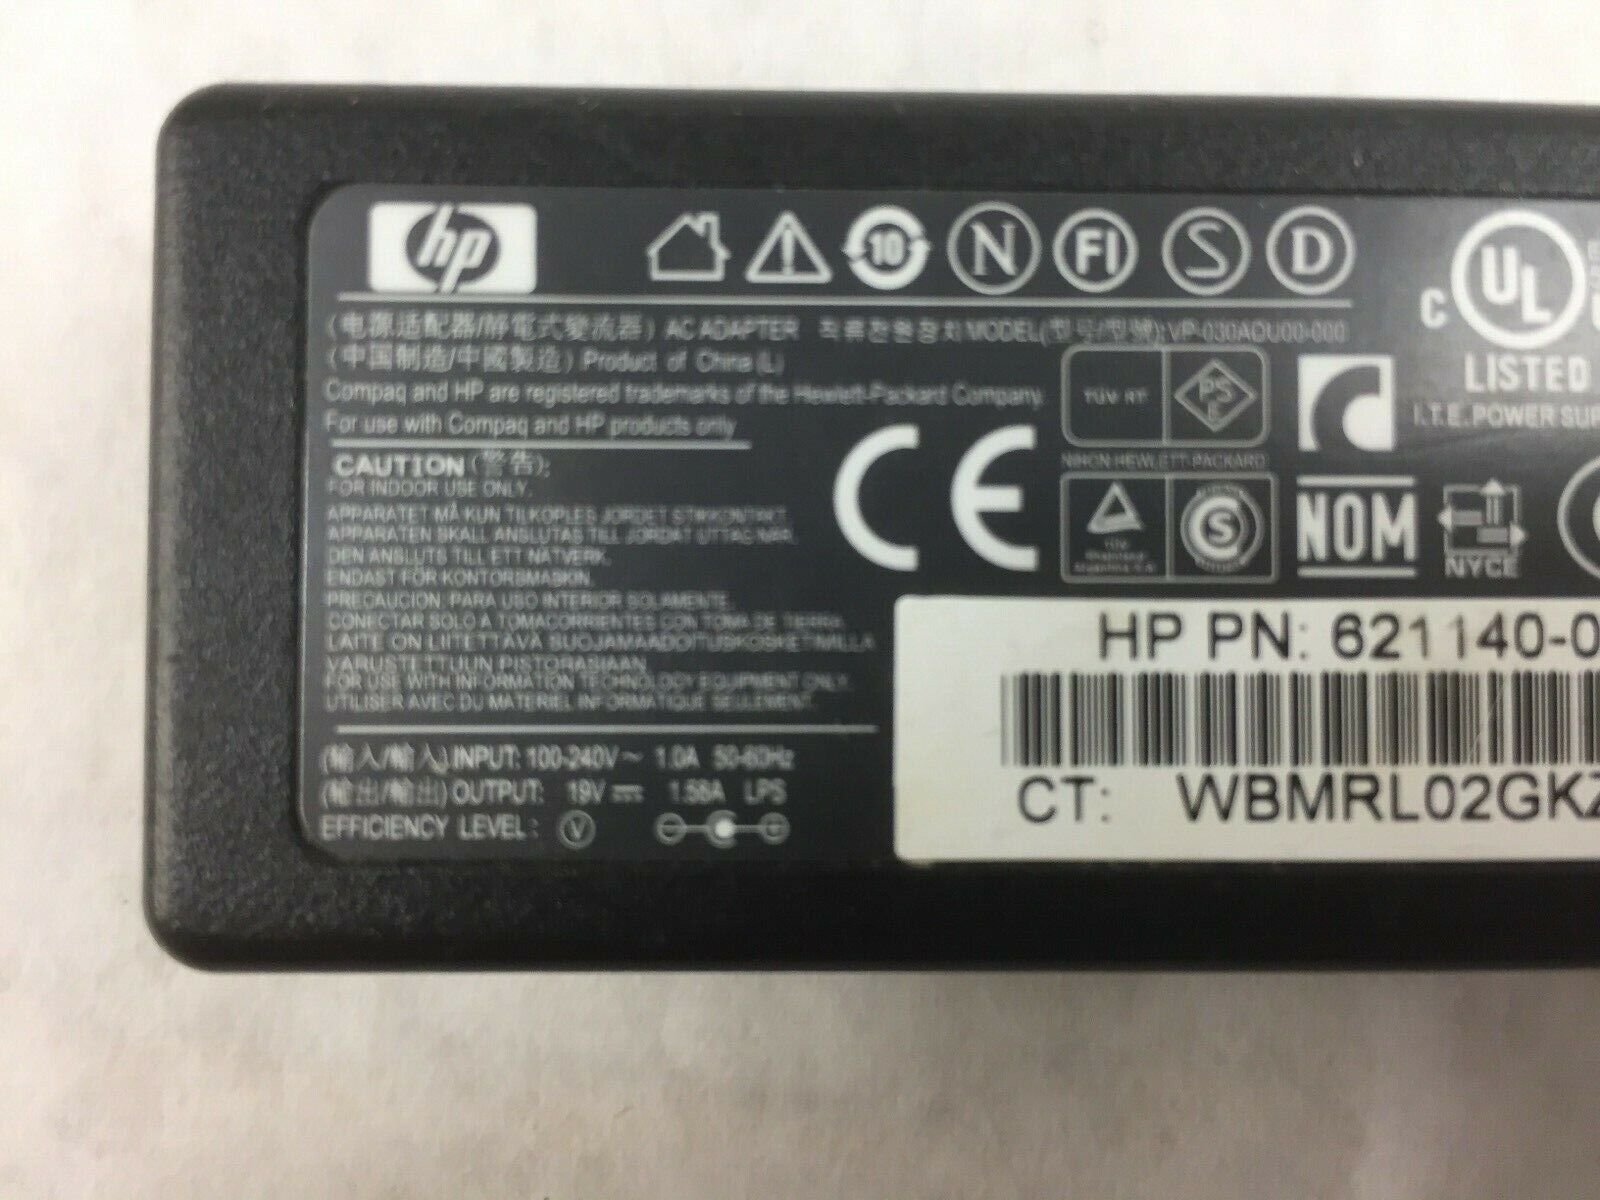 HP Original AC Adapter Power Supply Charger VP-030ADU00-000 621140-001